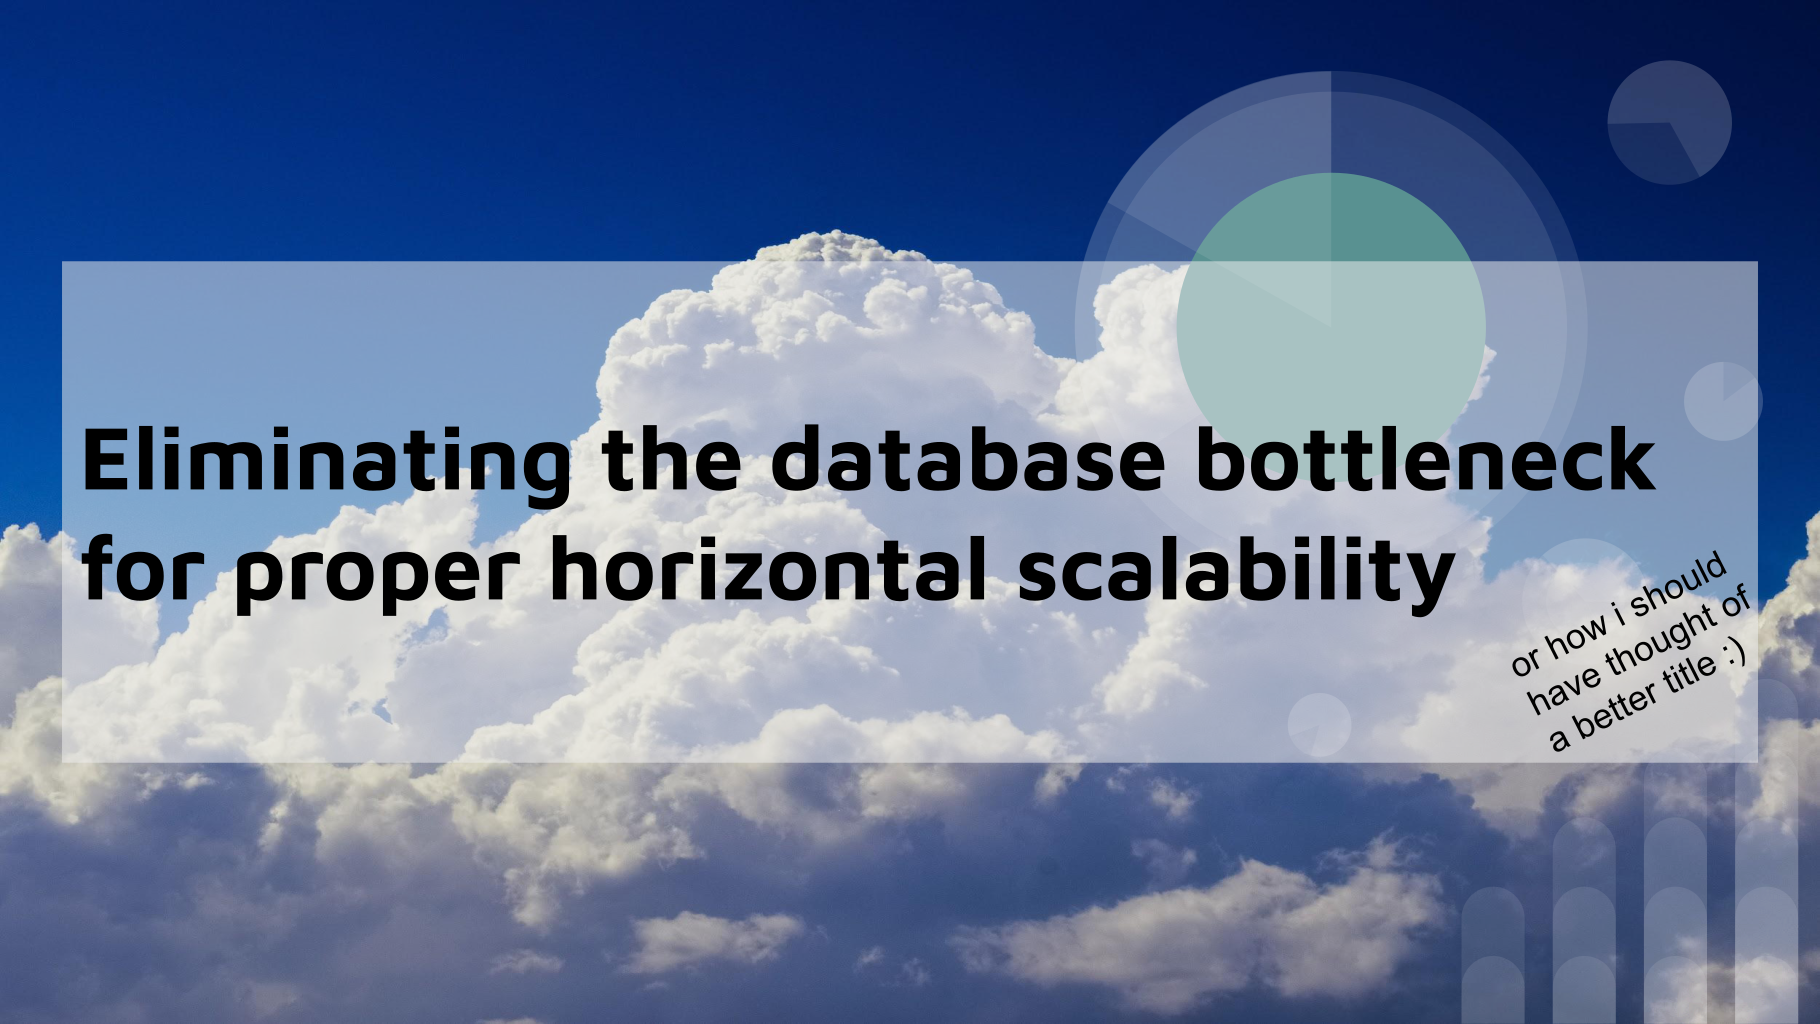 Database bottleneck